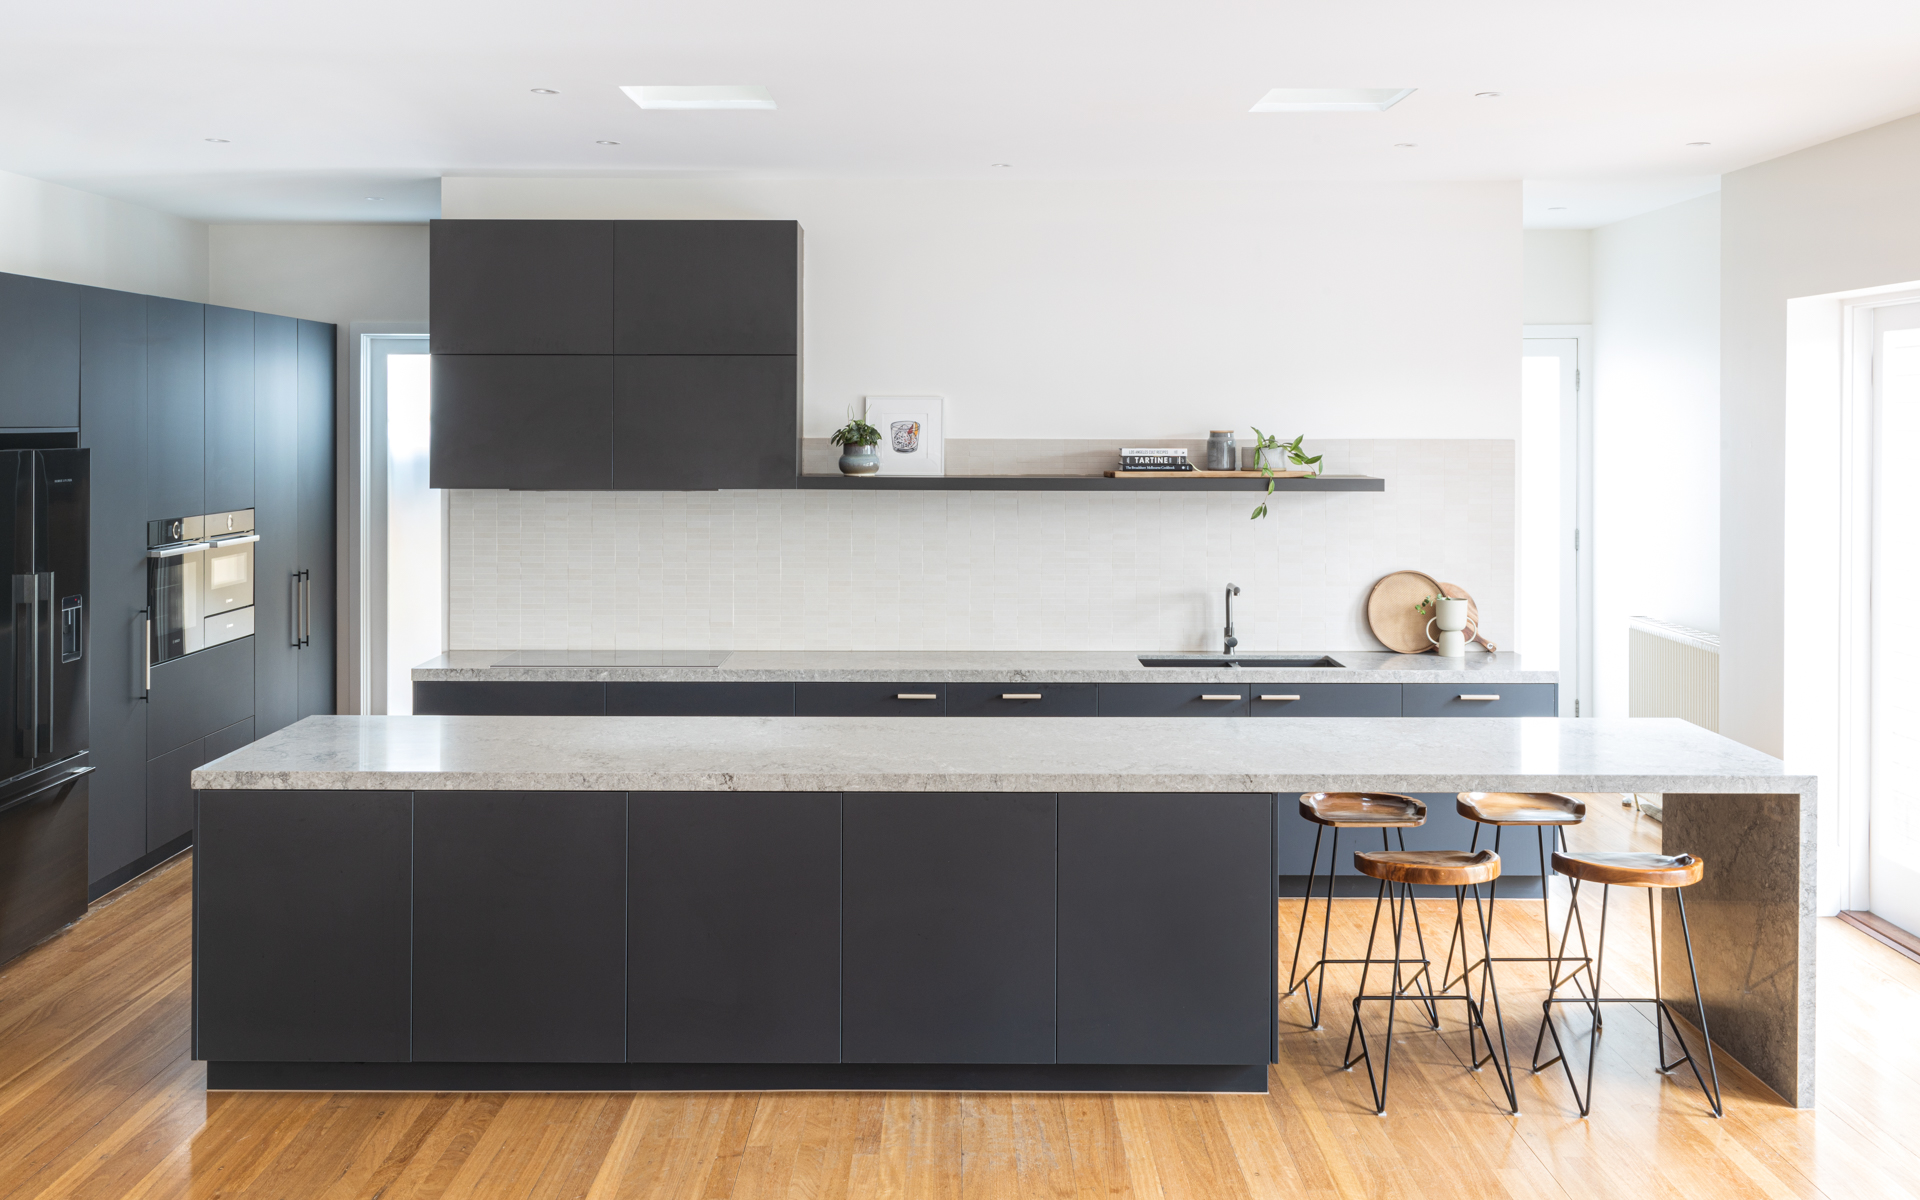 Modern Elwood kitchen renovation in Polytec matt black melamine with Caesarstone Turbine Grey stone benchtop and textured splashback tile